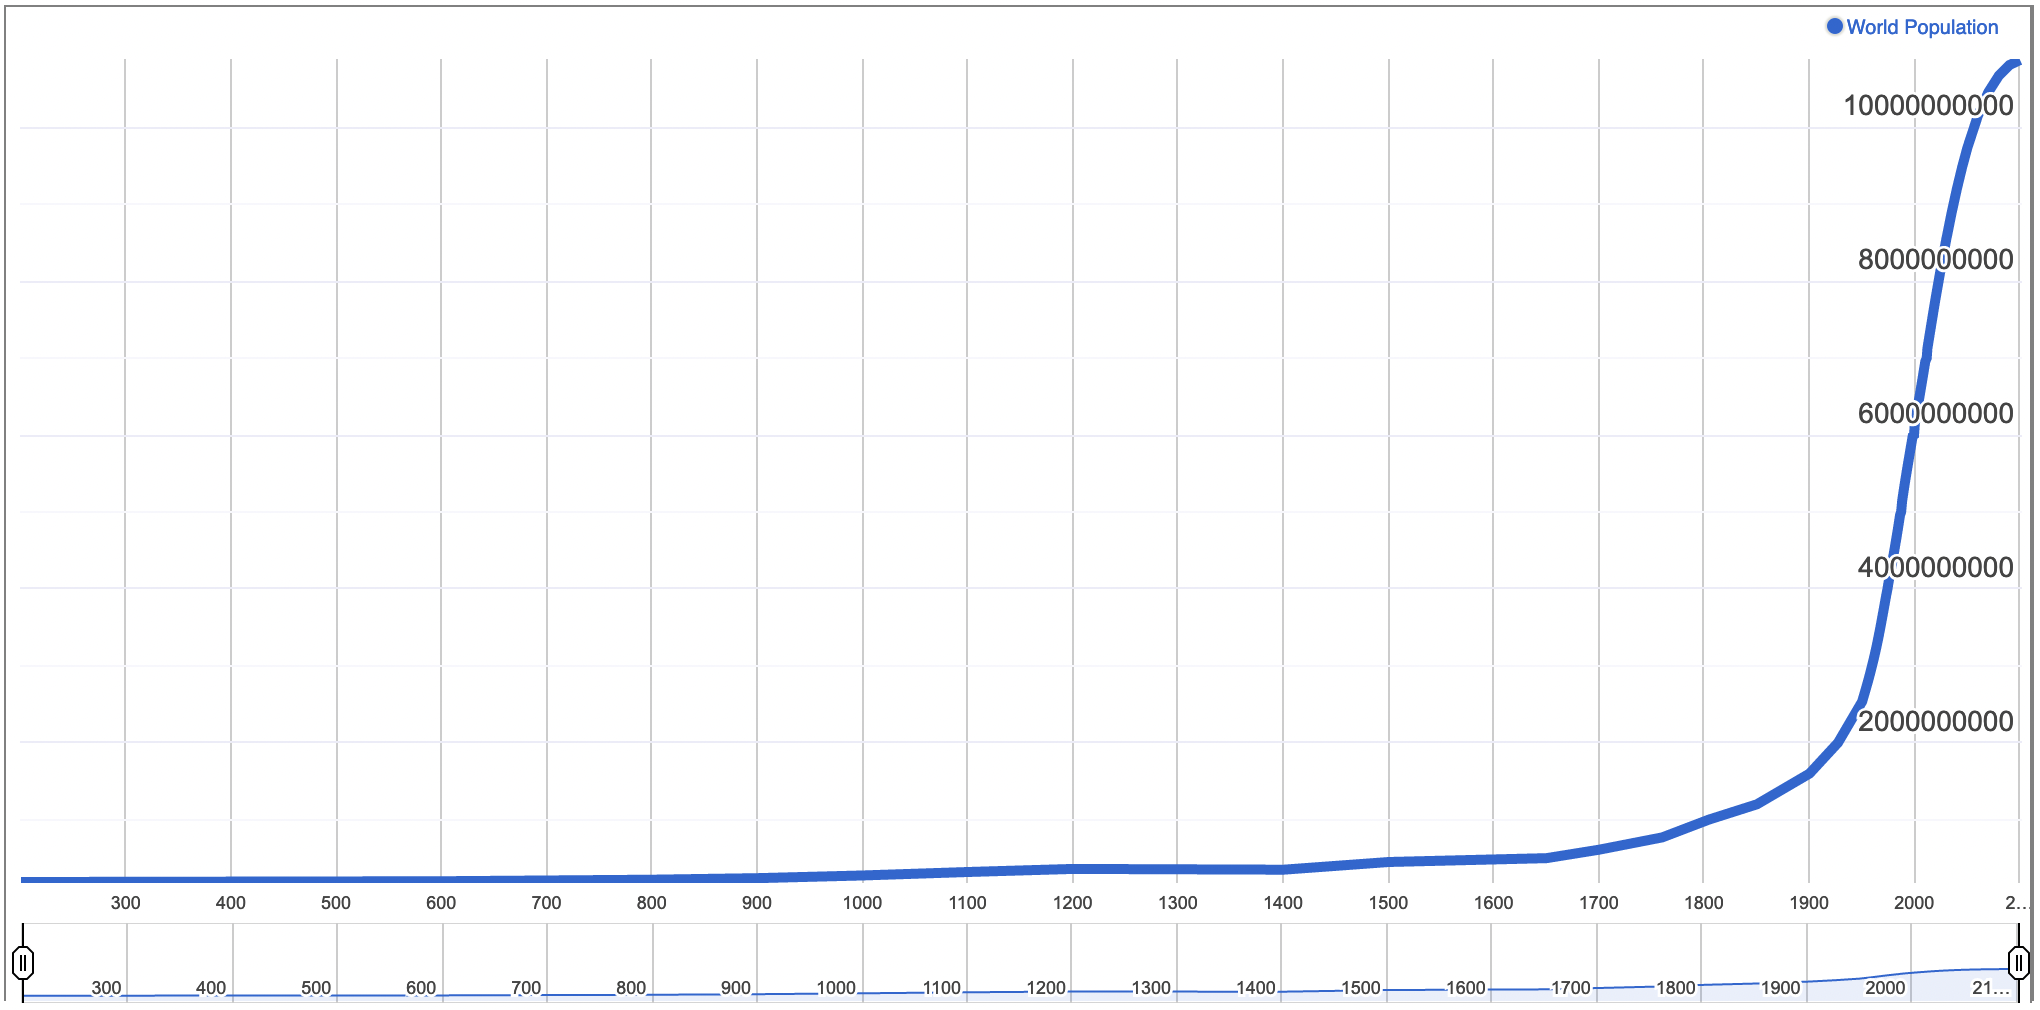 Https worldometers info. Динамика населения земли за 100 лет. Рост численности населения земли за 100 лет. Численность населения планеты в 1900 году. График роста населения земли.